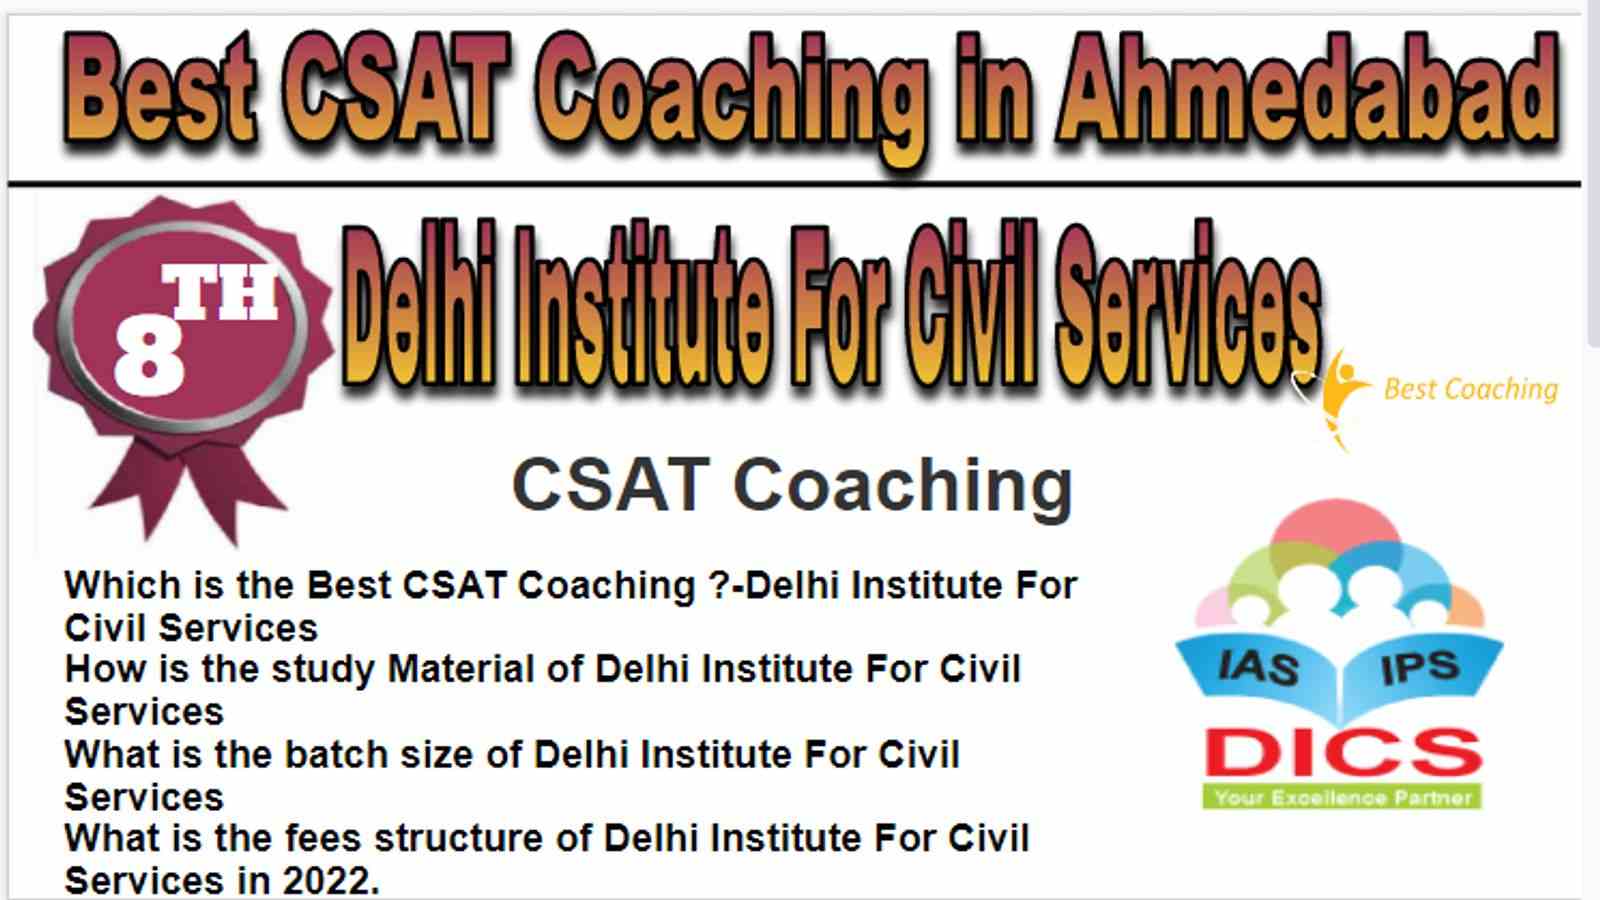 Rank 8 Best CSAT Coaching in Ahmedabad